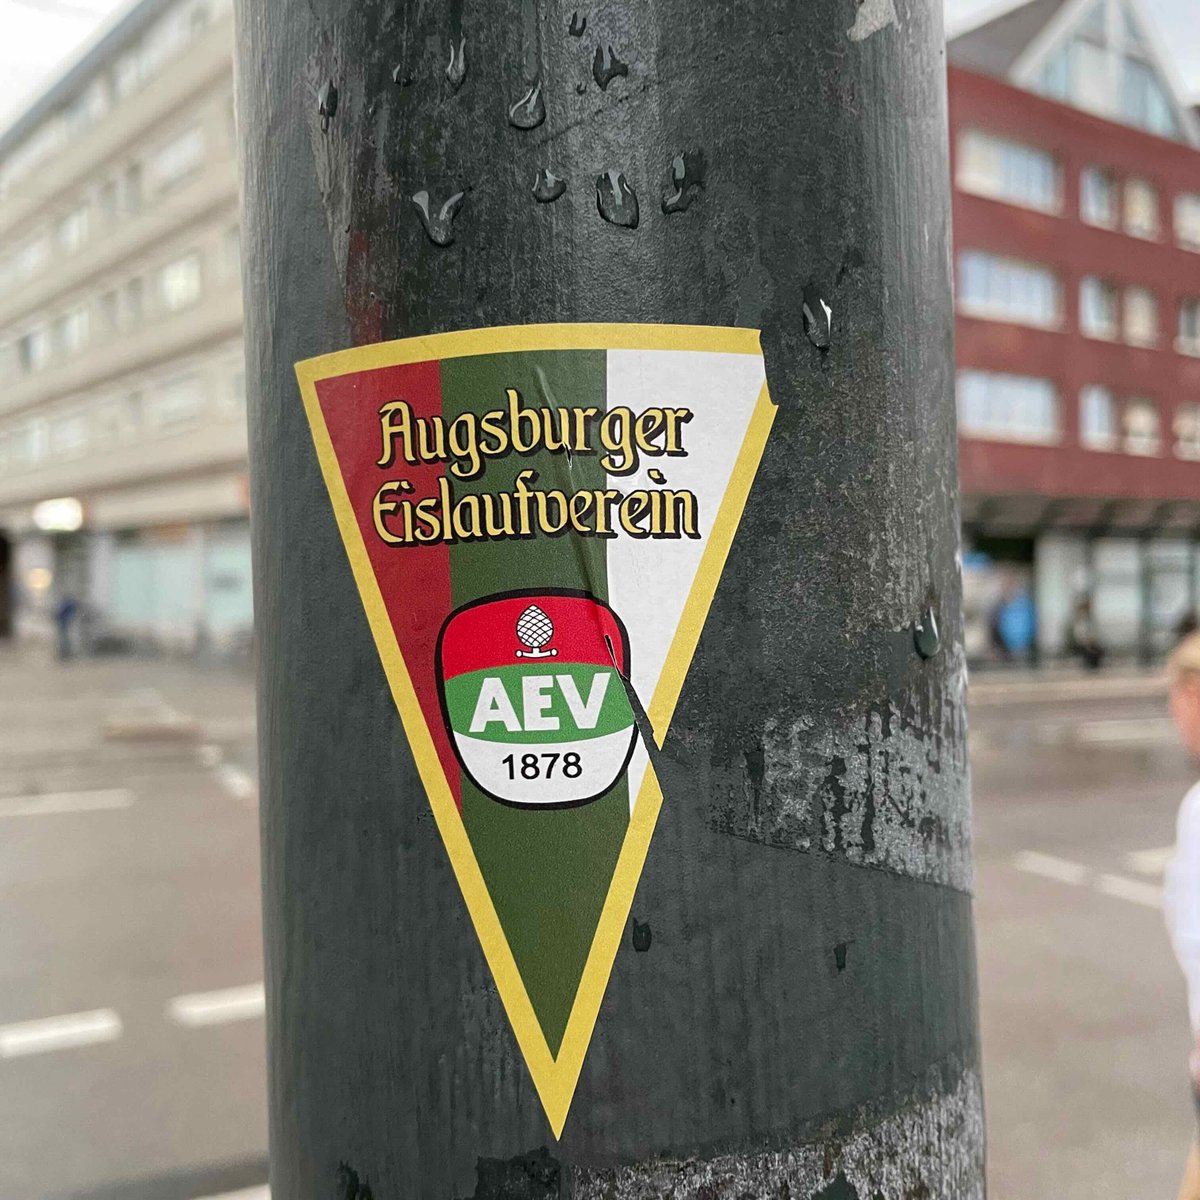 🇩🇪 FC Augsburg
@FCAugsburg @FCA_World @VFLFCAugsburg @Reeceoxford_
#FCA
#ultrasstickers #footballstickers #footballculture #Ultras #StickerHunting